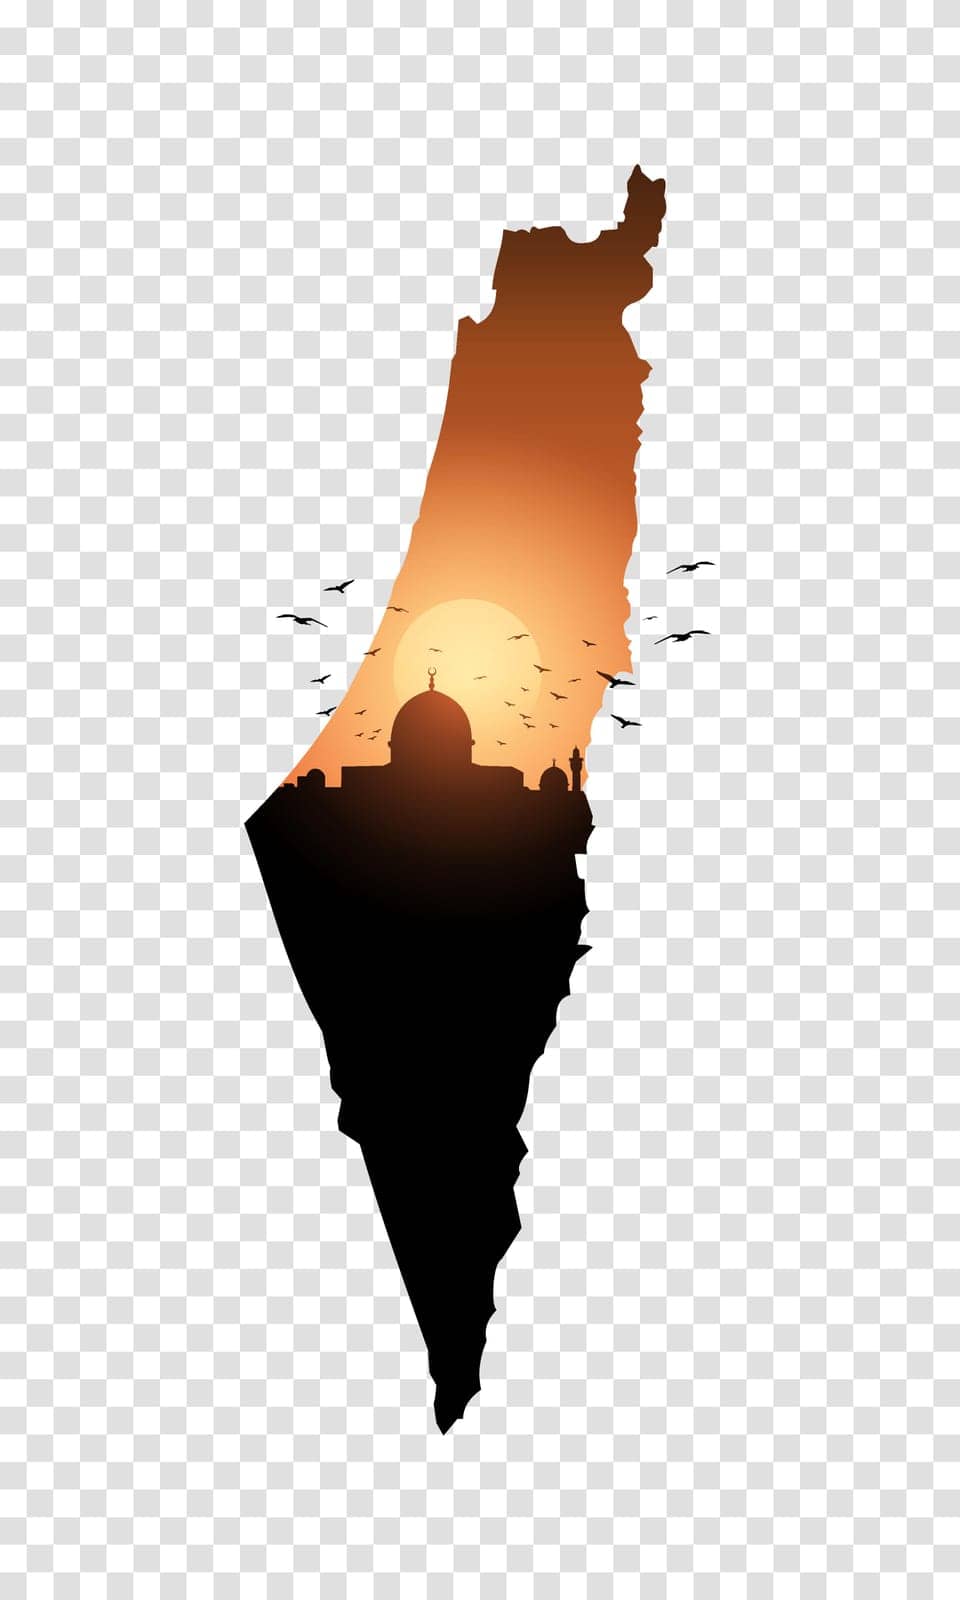 Vector map of palestine. Vector illustration